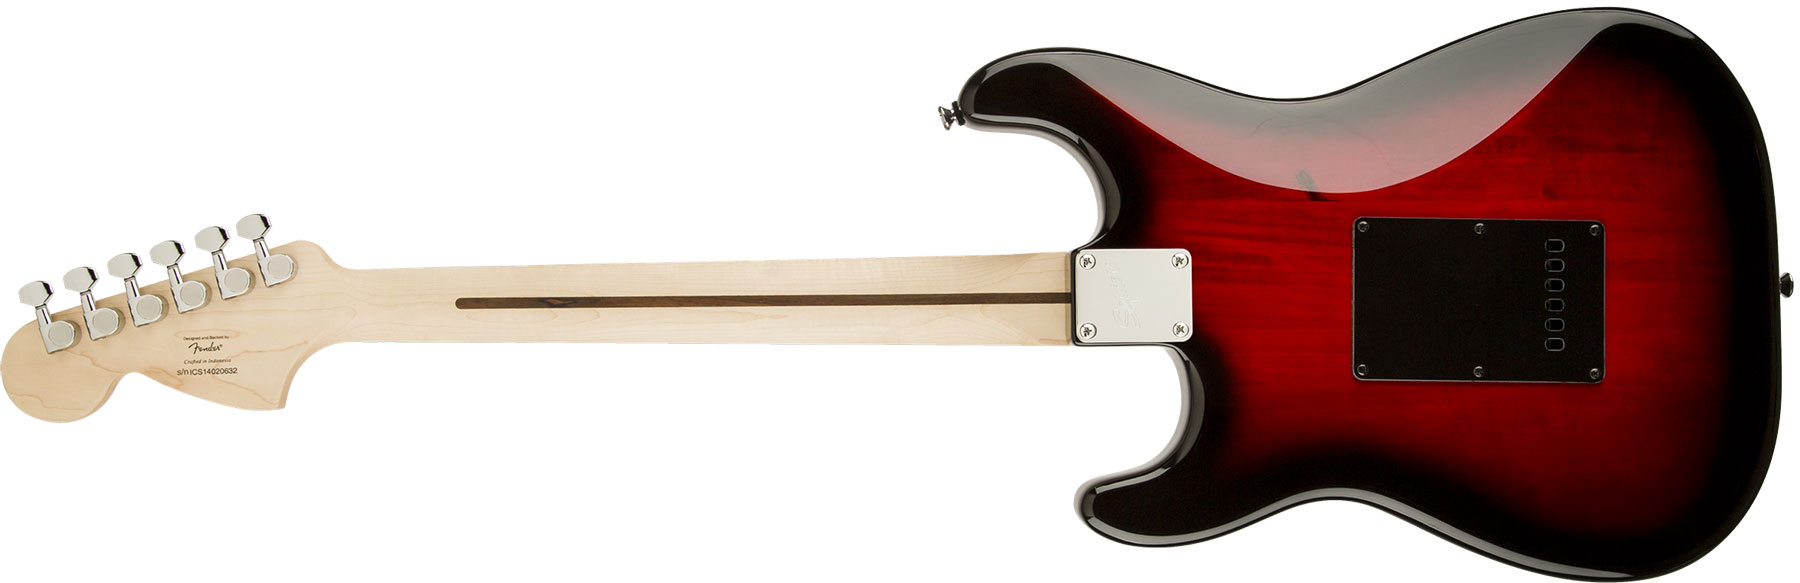 Squier Strat Standard Sss Lau - Antique Burst - Str shape electric guitar - Variation 1